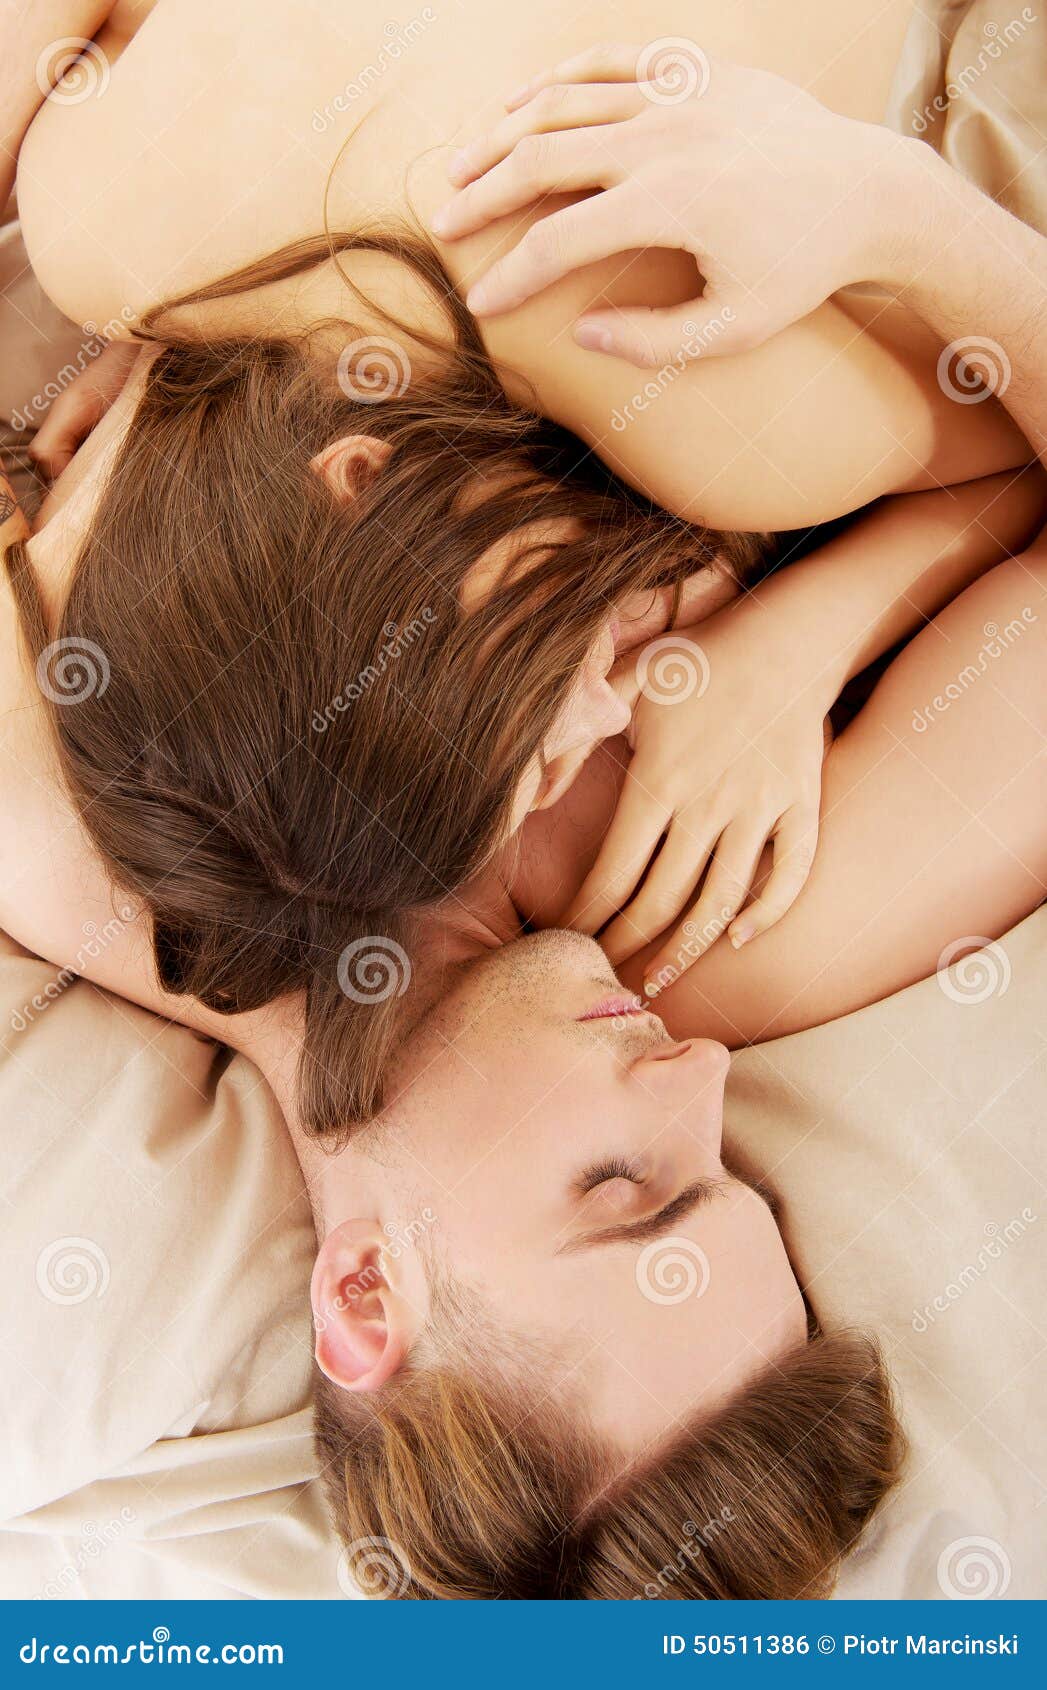 Loving Nude Heterosexual Couple on Bed. Stock Photo - Image of bedroom,  female: 50511386